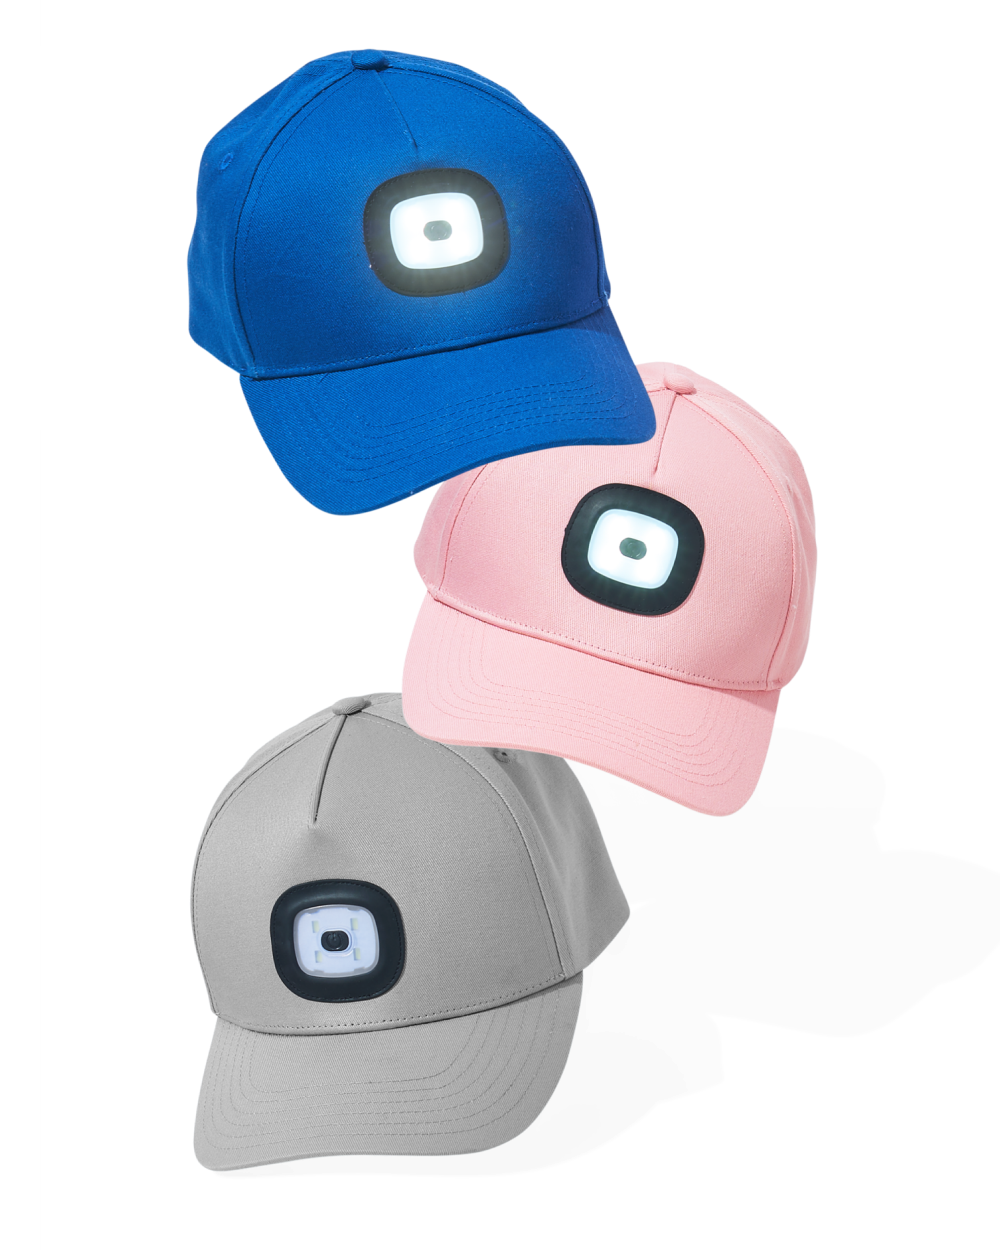 Headlightz Baseball Caps